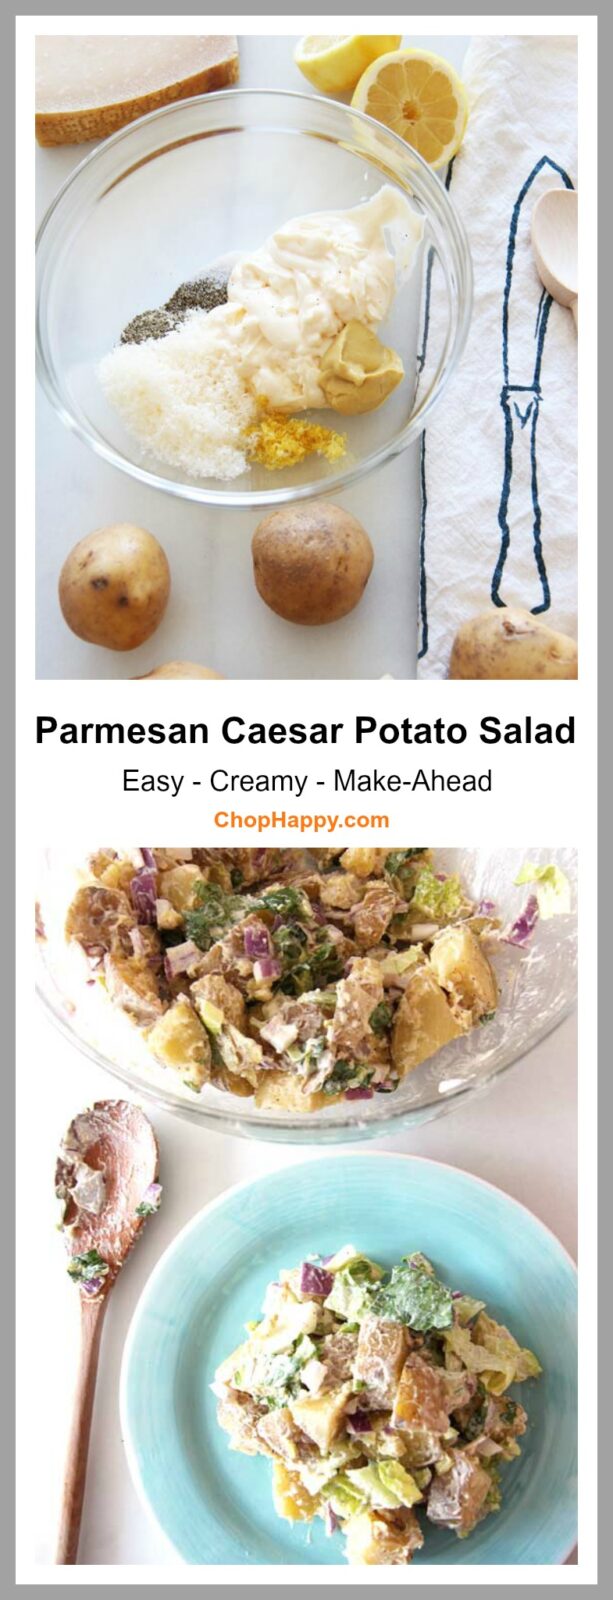 Parmesan Caesar Potato Salad Recipe. An easy creamy recipe that is great for make-ahead ideas. ChopHappy.com